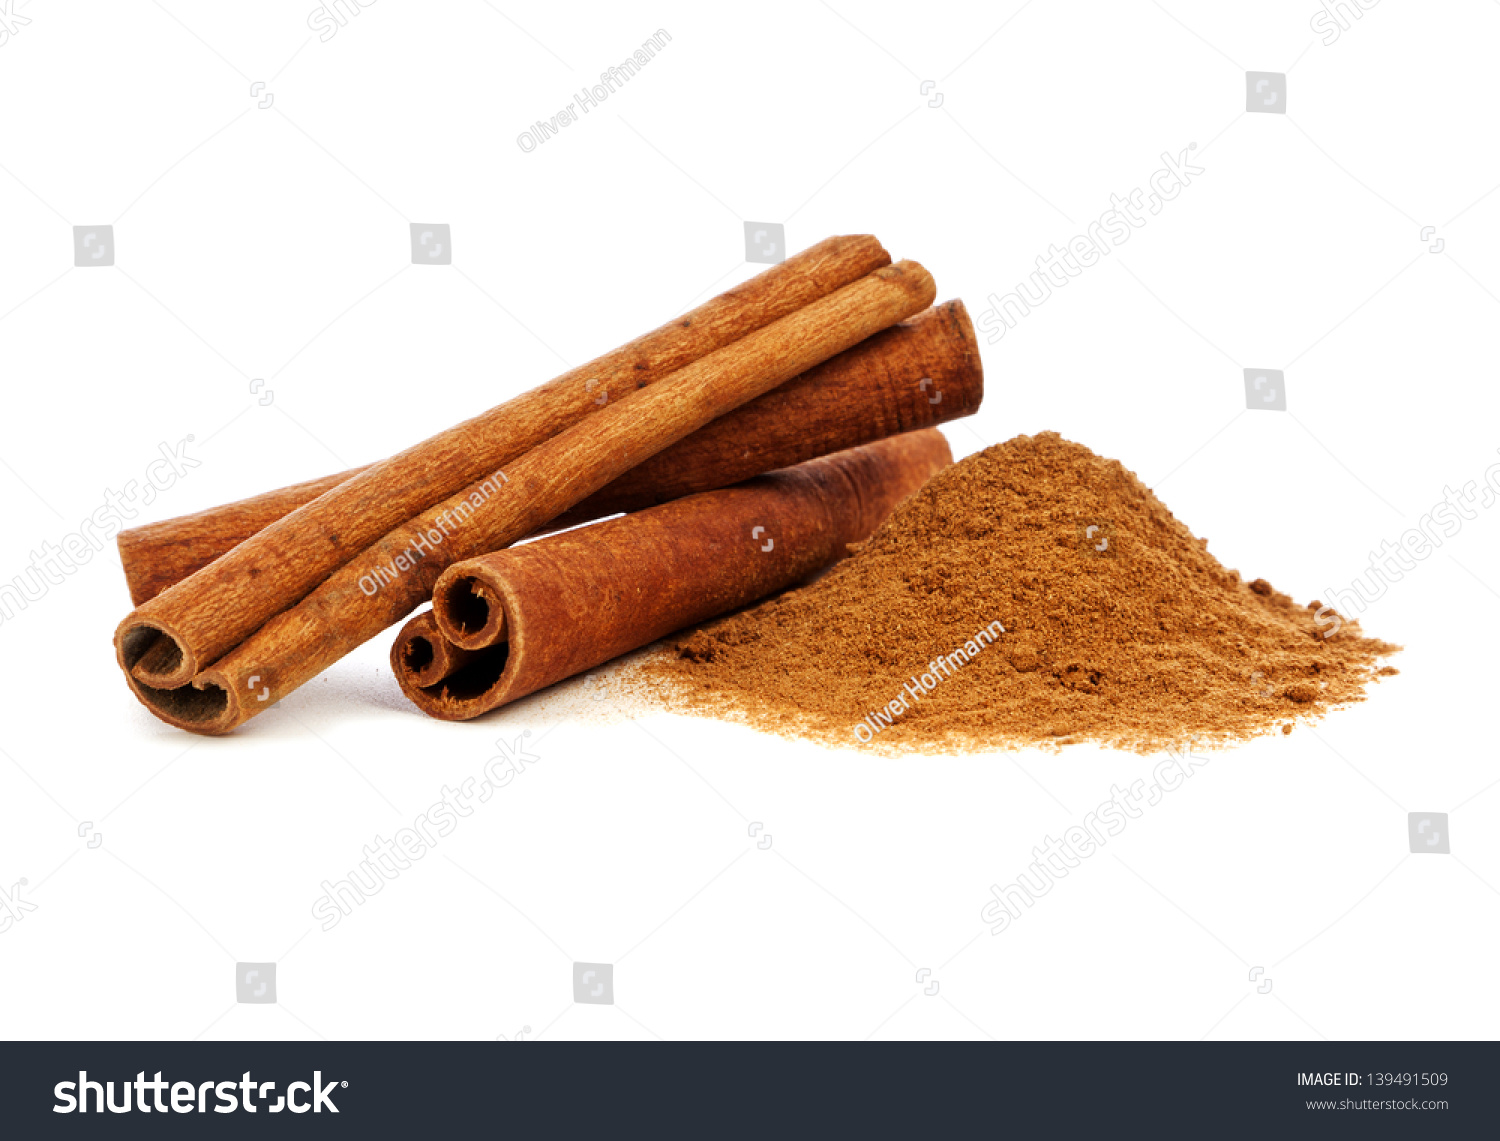 Cinnamon sticks and powder on white background #139491509